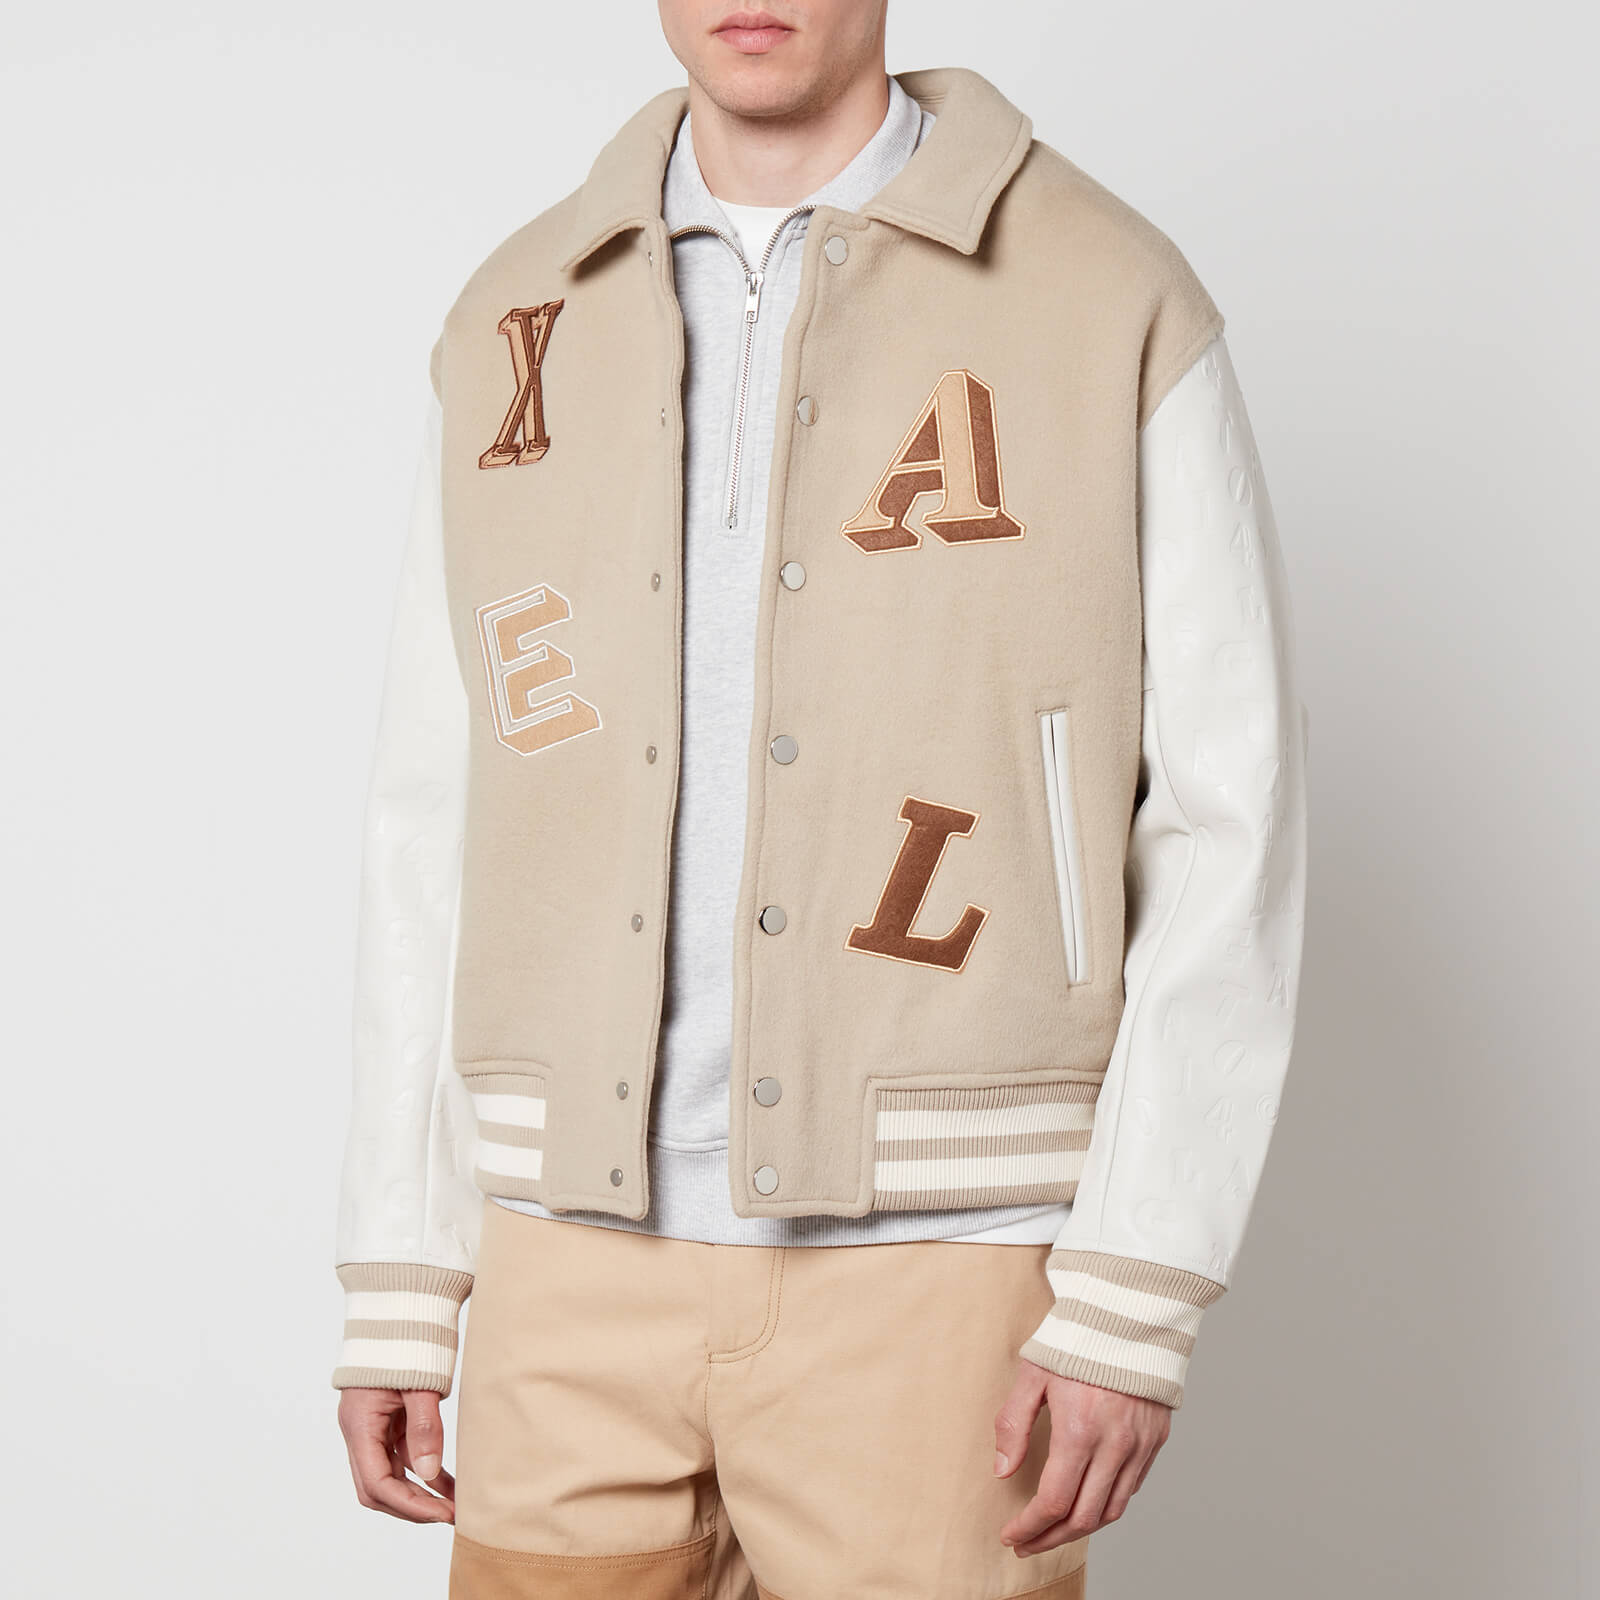 Axel Arigato Men's Typo Varsity Jacket - Pale Beige/Off White - M